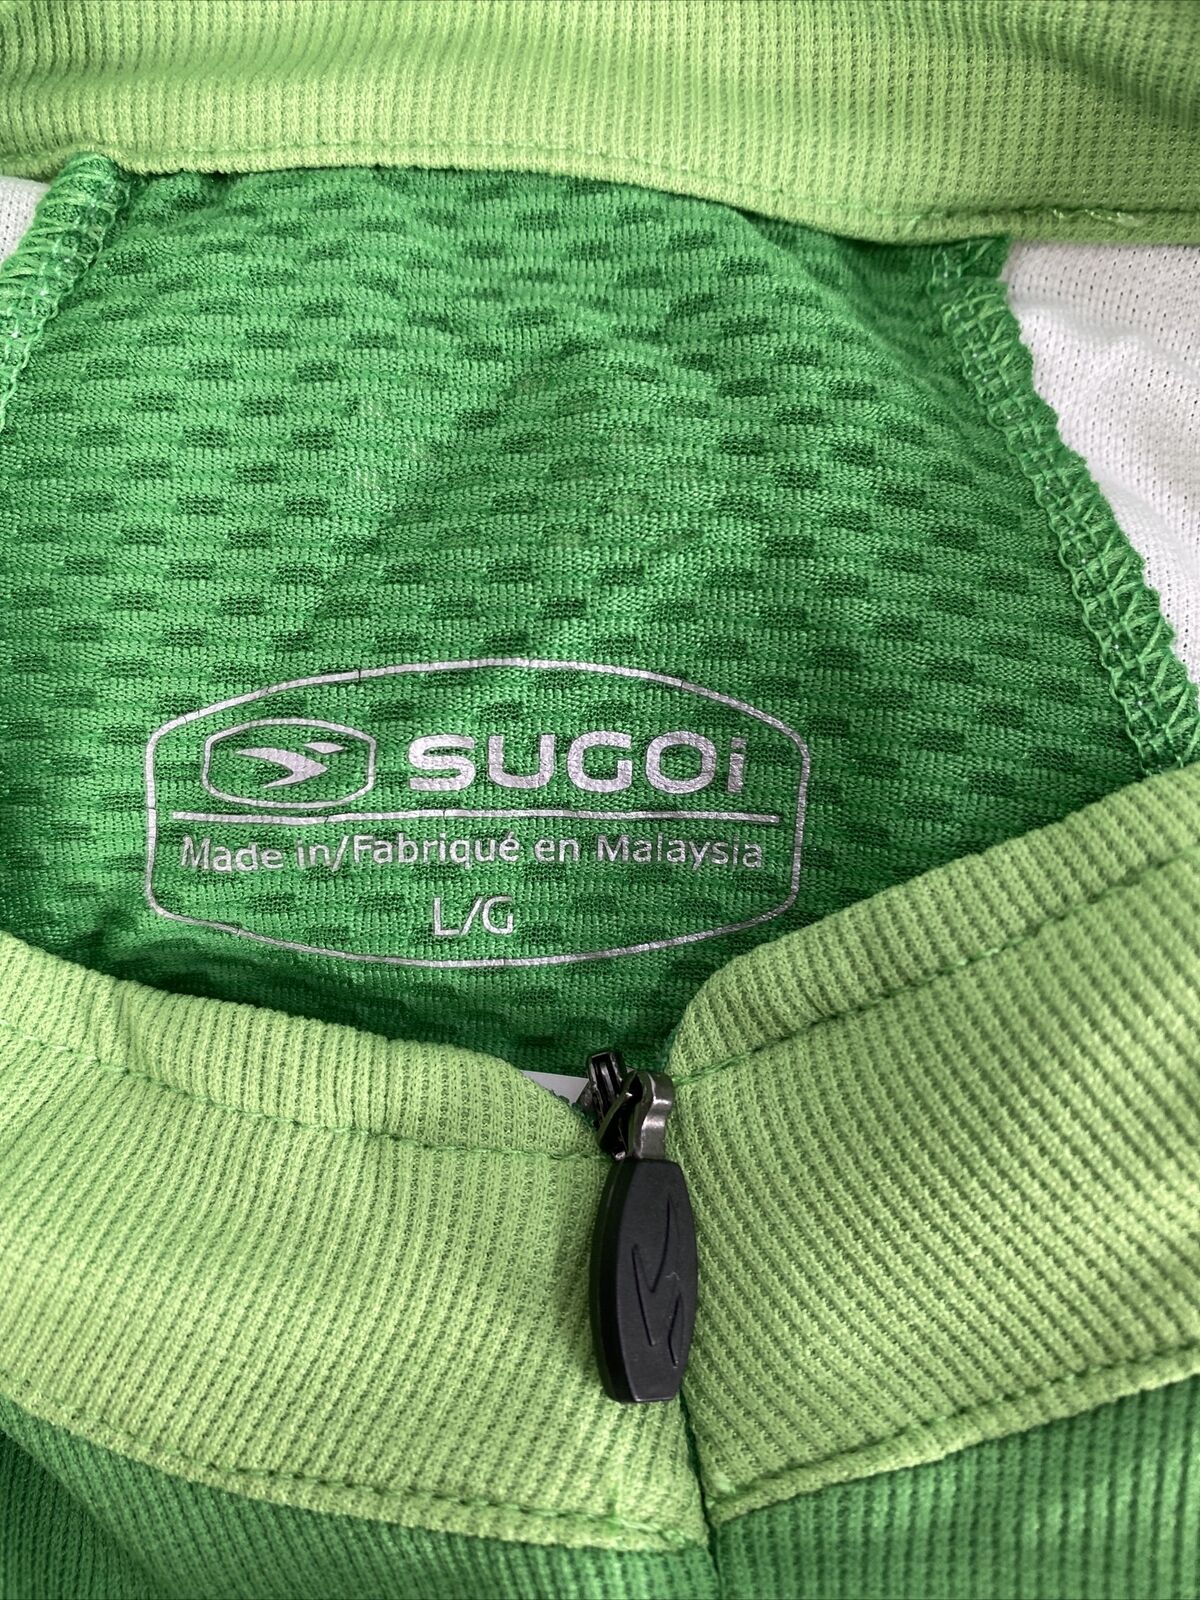 Sugoi Camiseta deportiva de ciclismo de manga corta con cremallera frontal para mujer, color verde, L